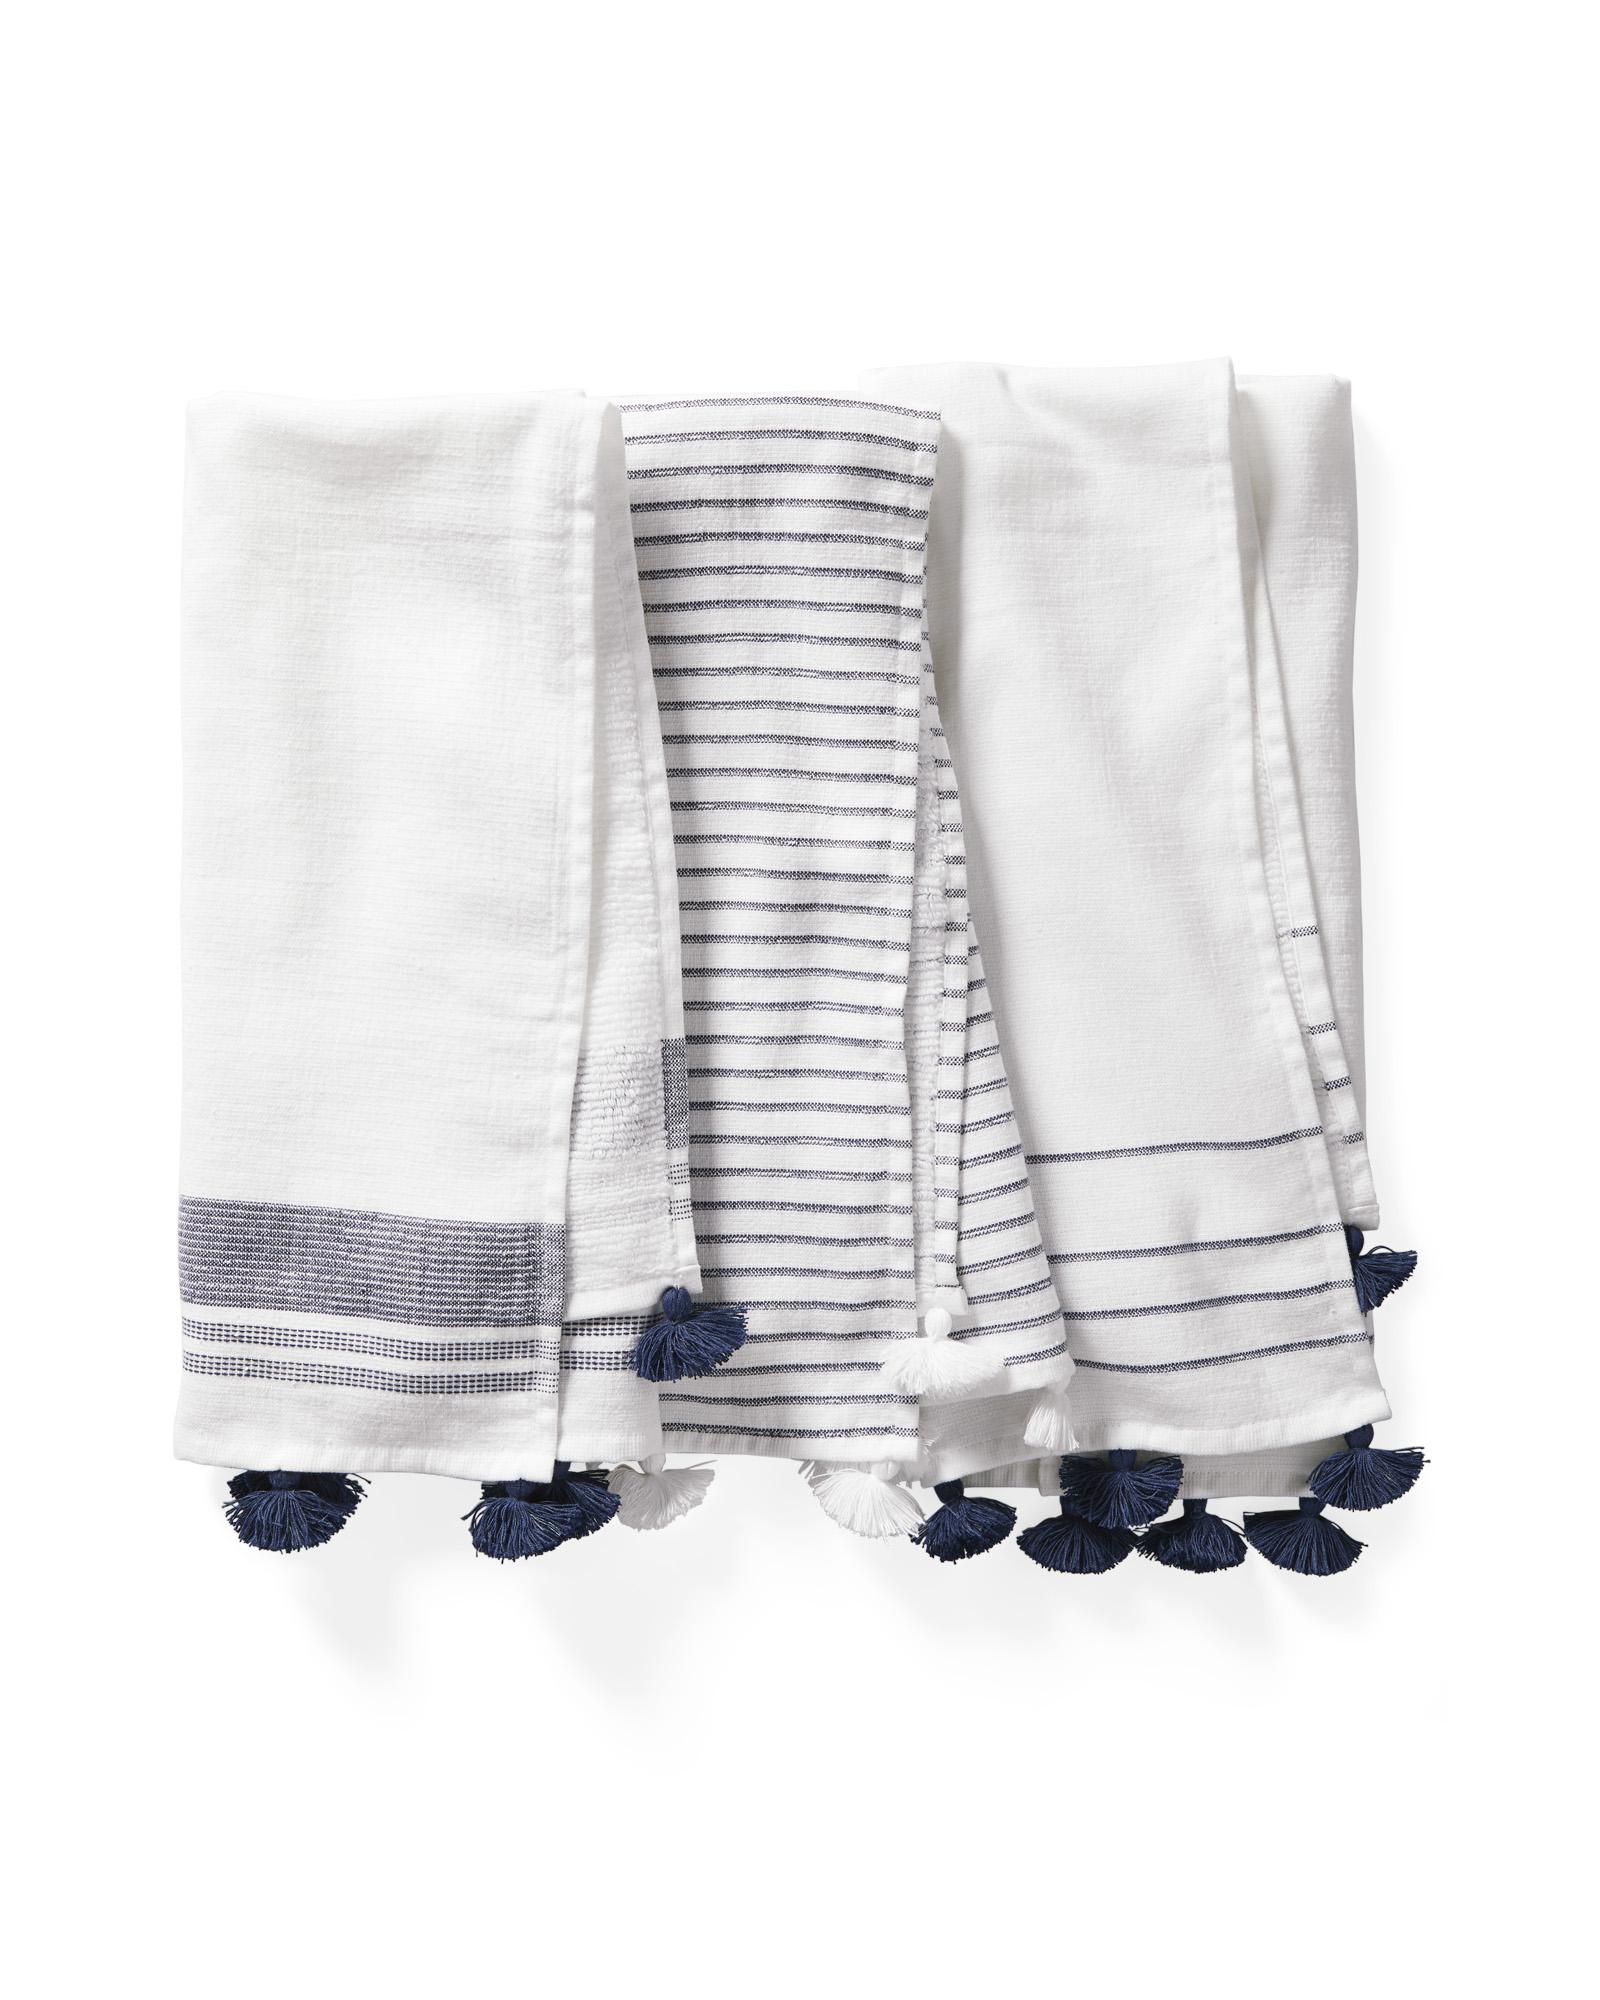 Linen Kitchen Towel in Blue Stripes, Set of 3 - SOUTH HOUS.